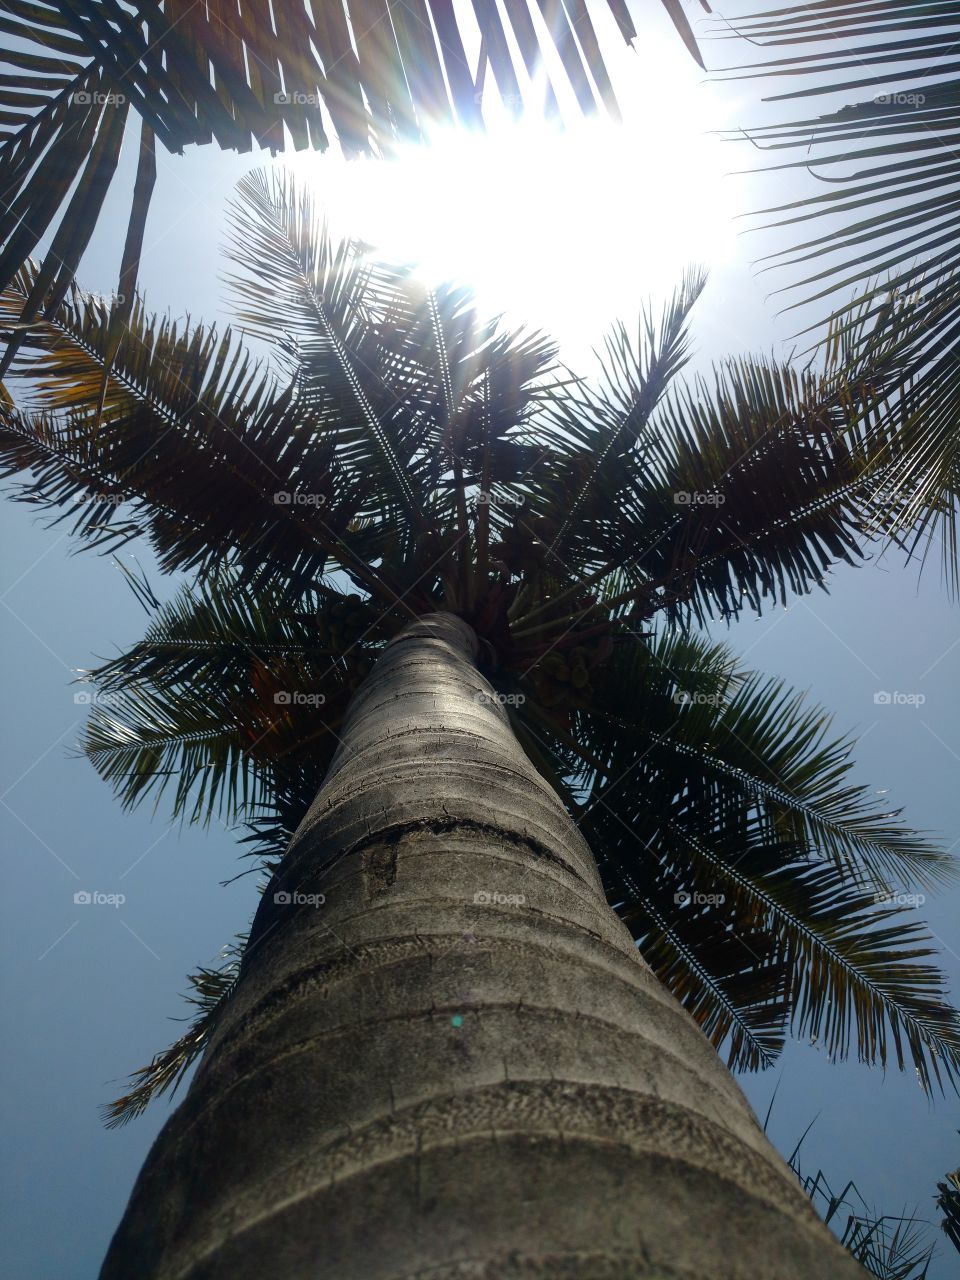 Hight of Coconut Tree.